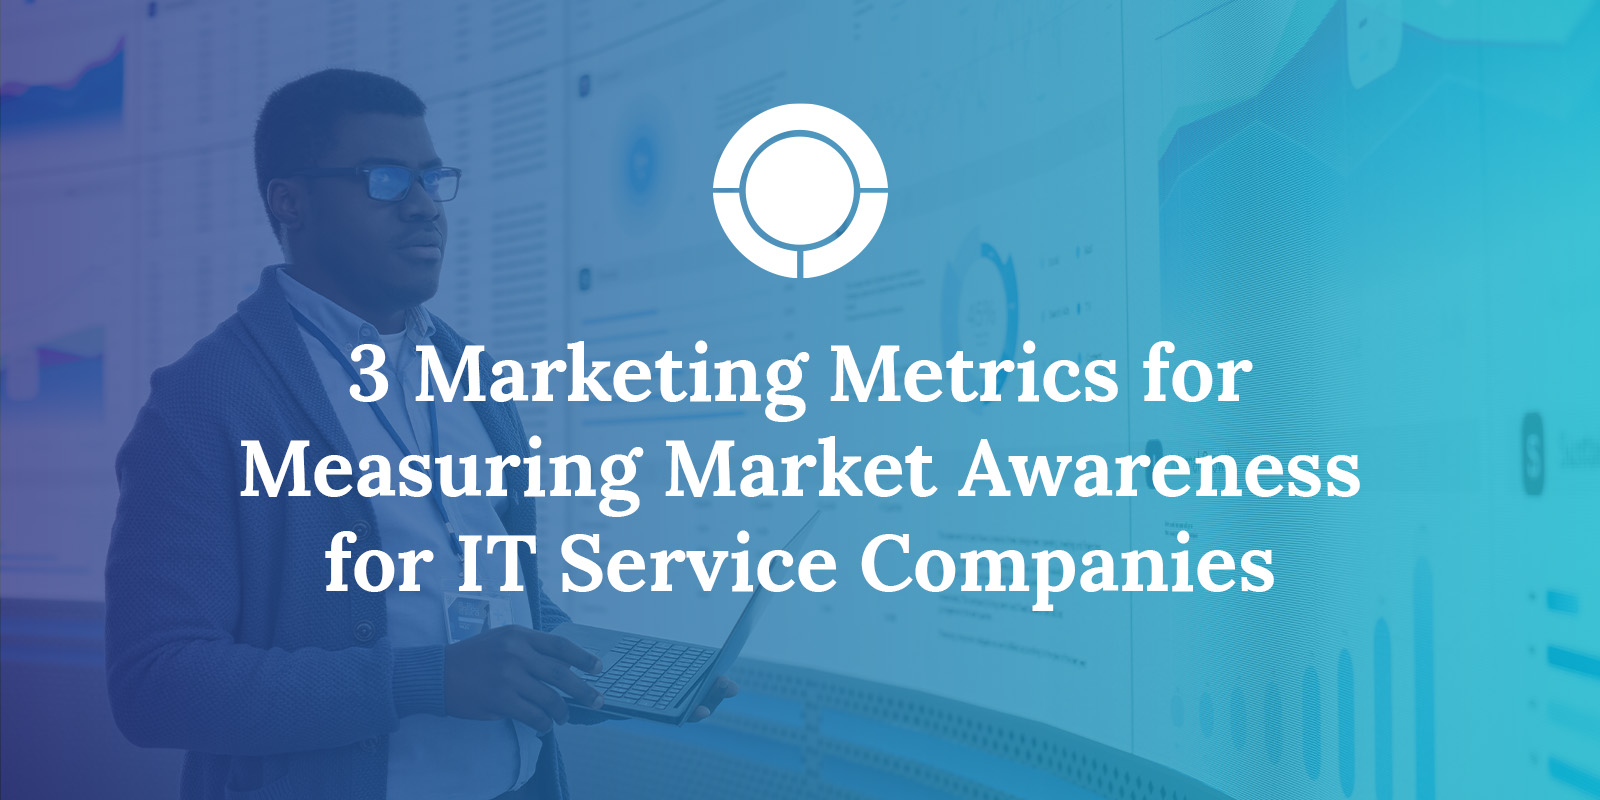 3 Marketing Metrics for Measuring Market Awareness